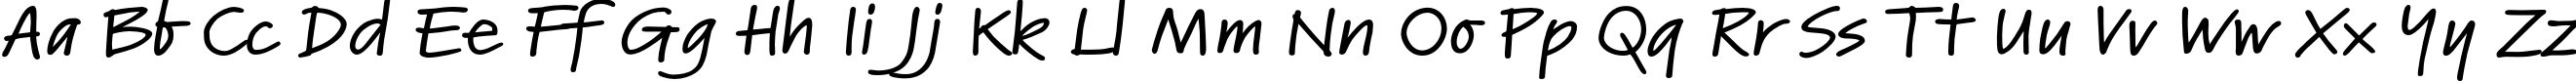 Пример написания английского алфавита шрифтом Kremlin Pro Expanded Demi